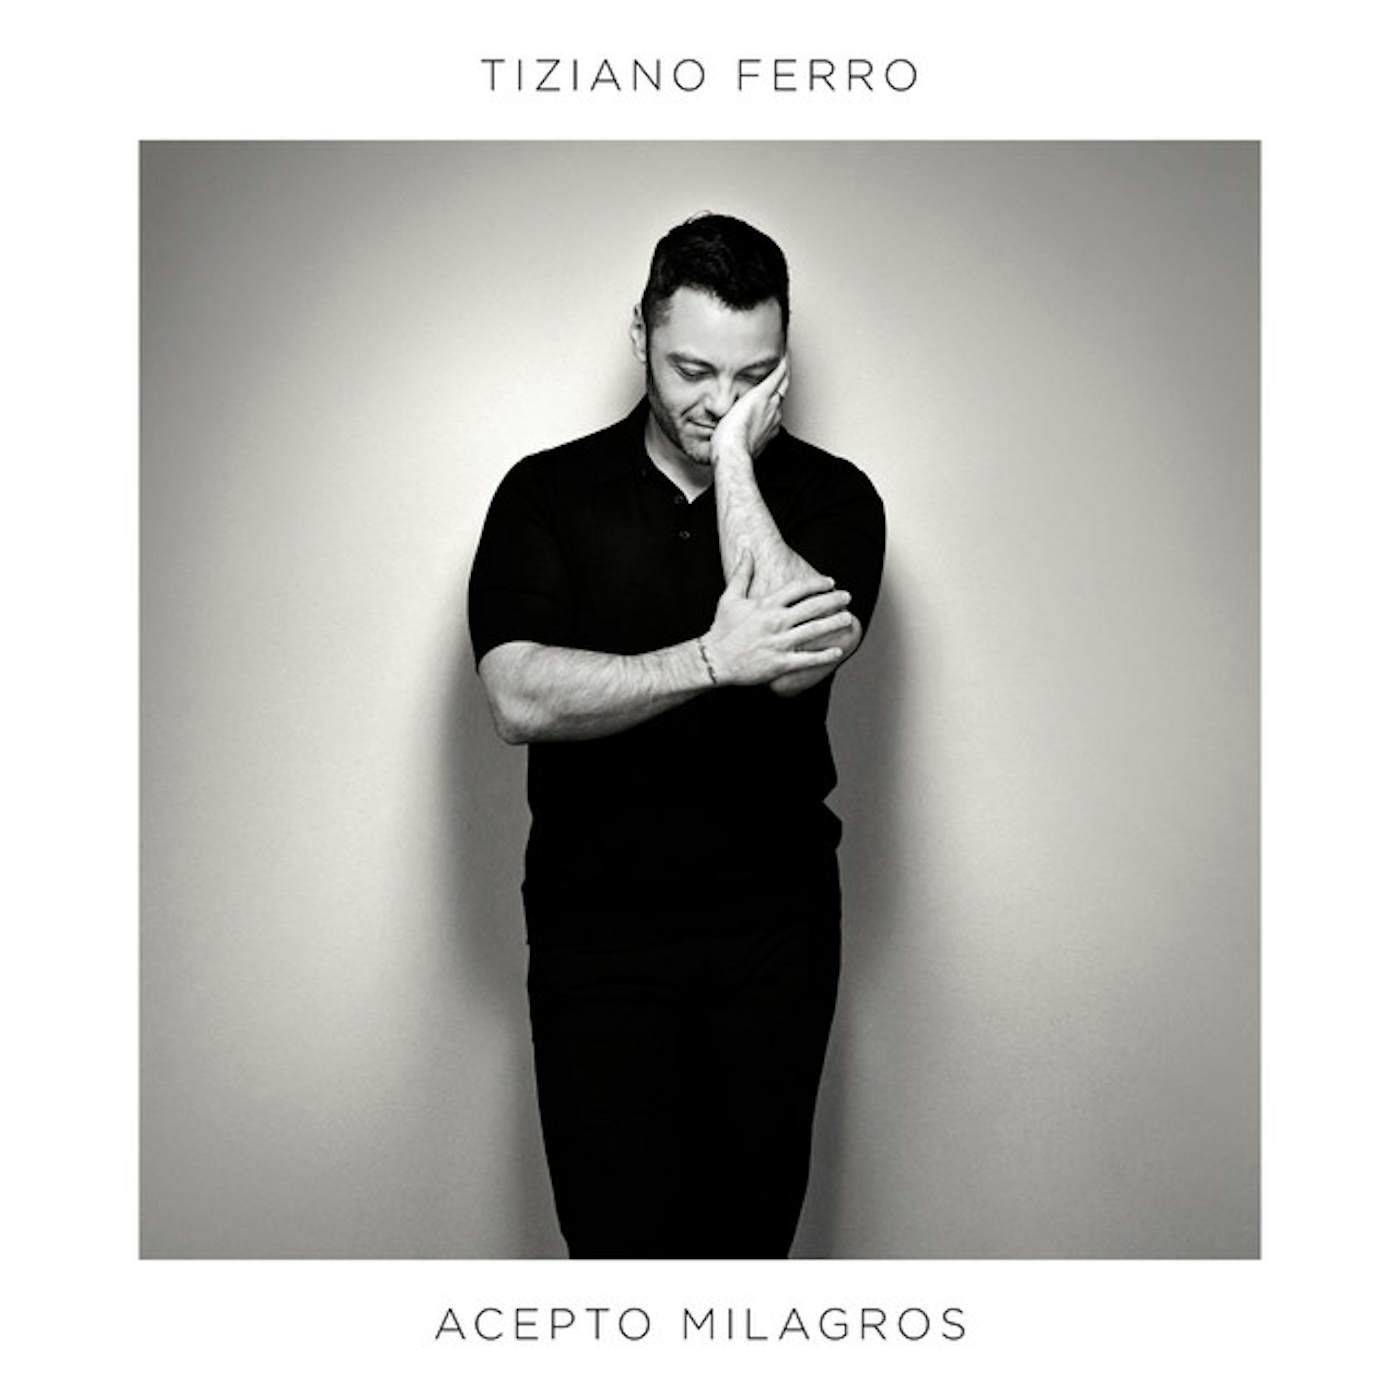 Tiziano Ferro ACEPTO MILAGROS CD